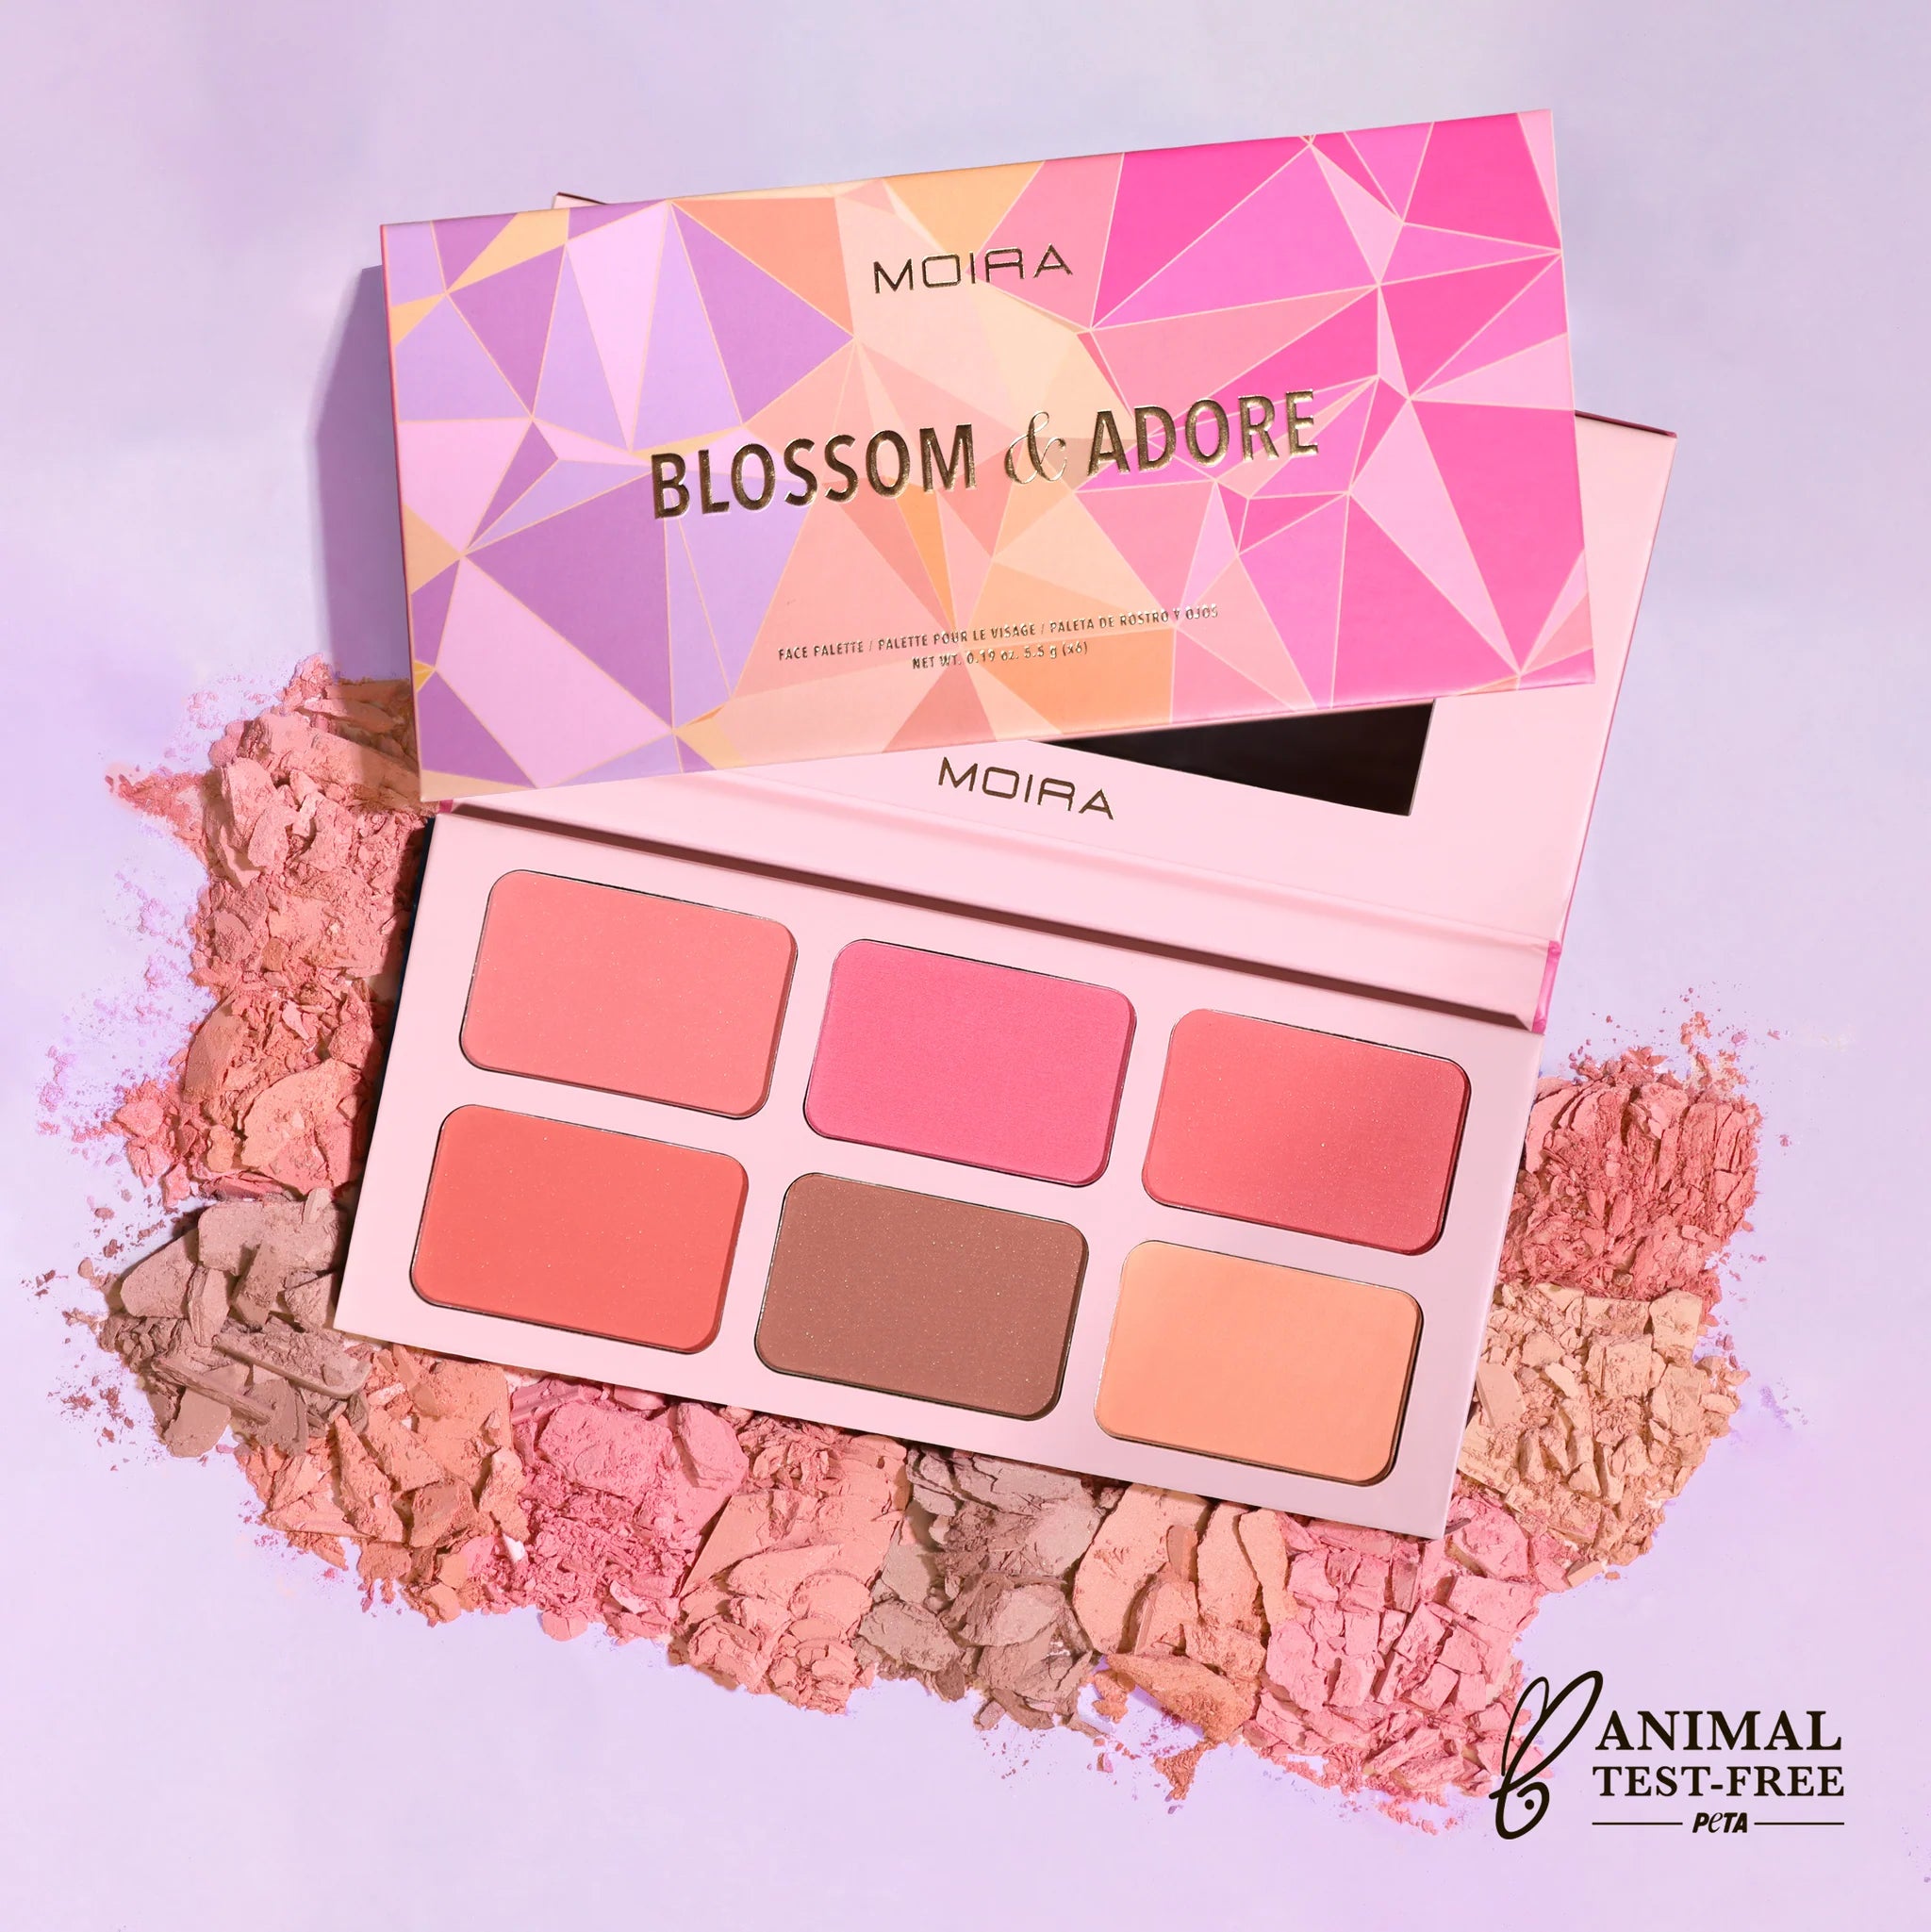 Moira Blossom & Adore Palette مويرا - باليت بلاشر - بلوسم اند أدور